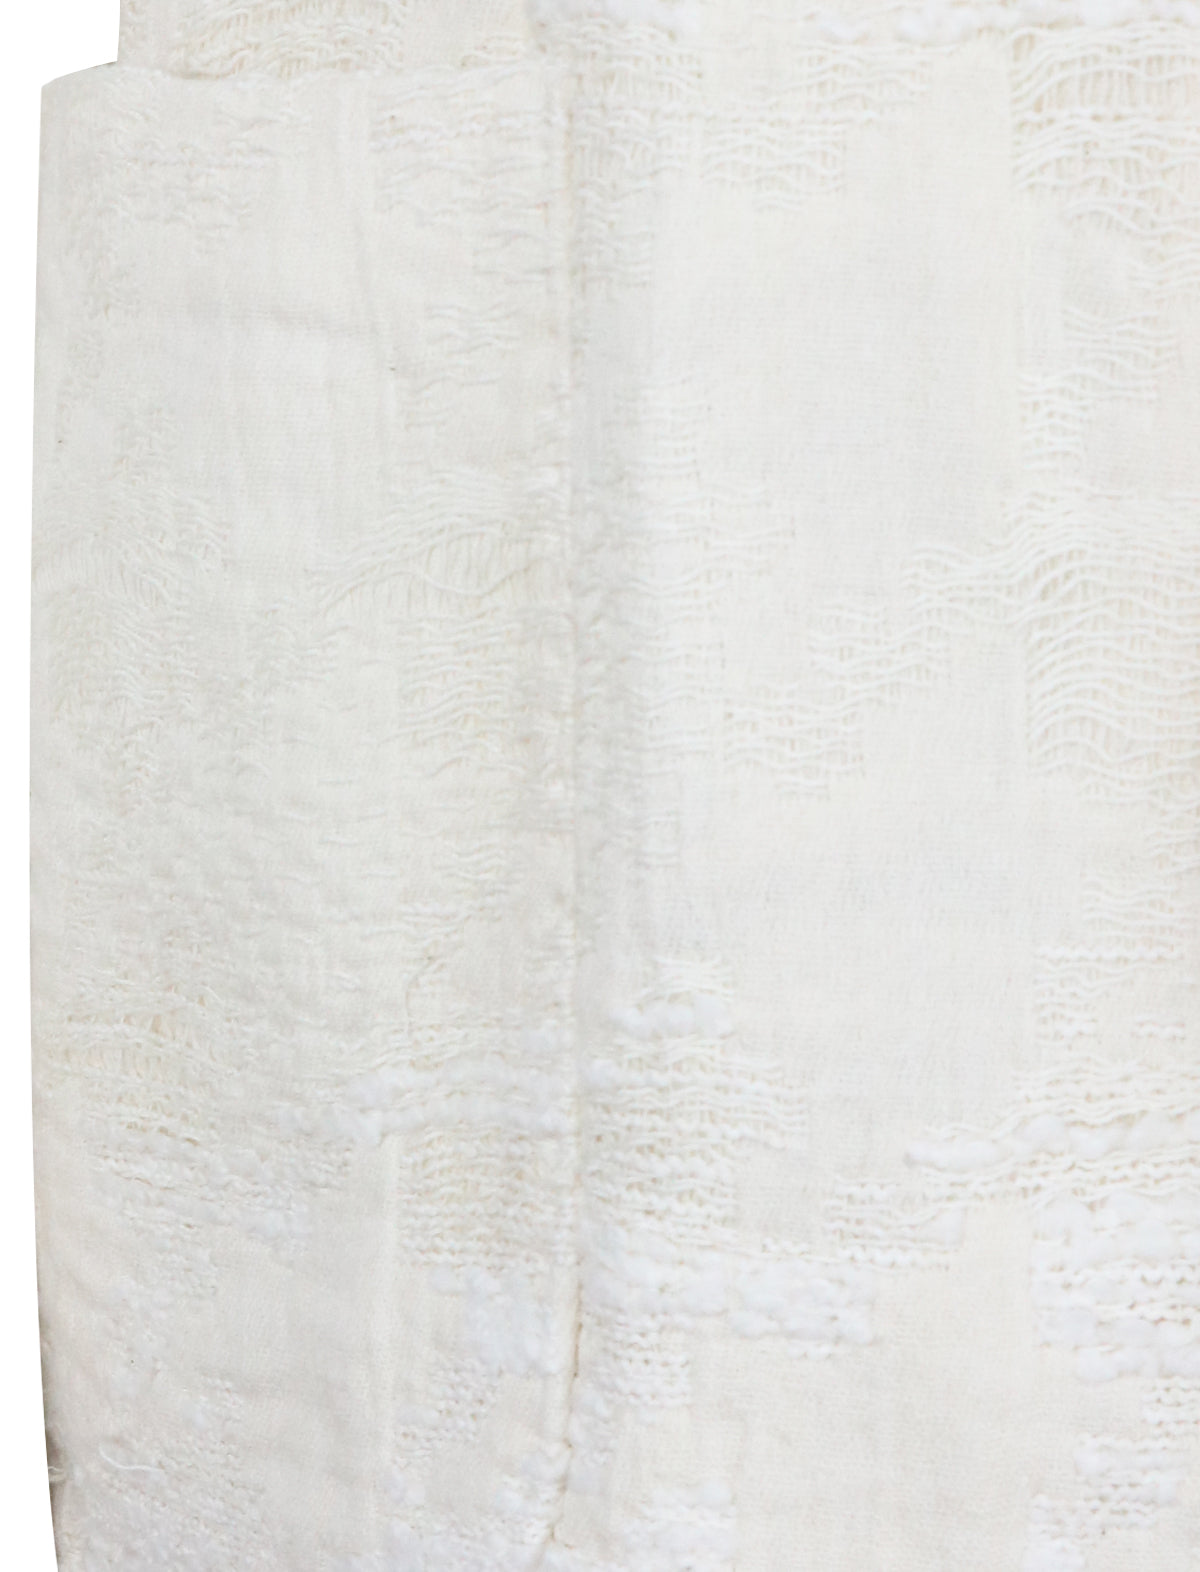 GABRIELE PASINI Textured Blazer in White/Ivory